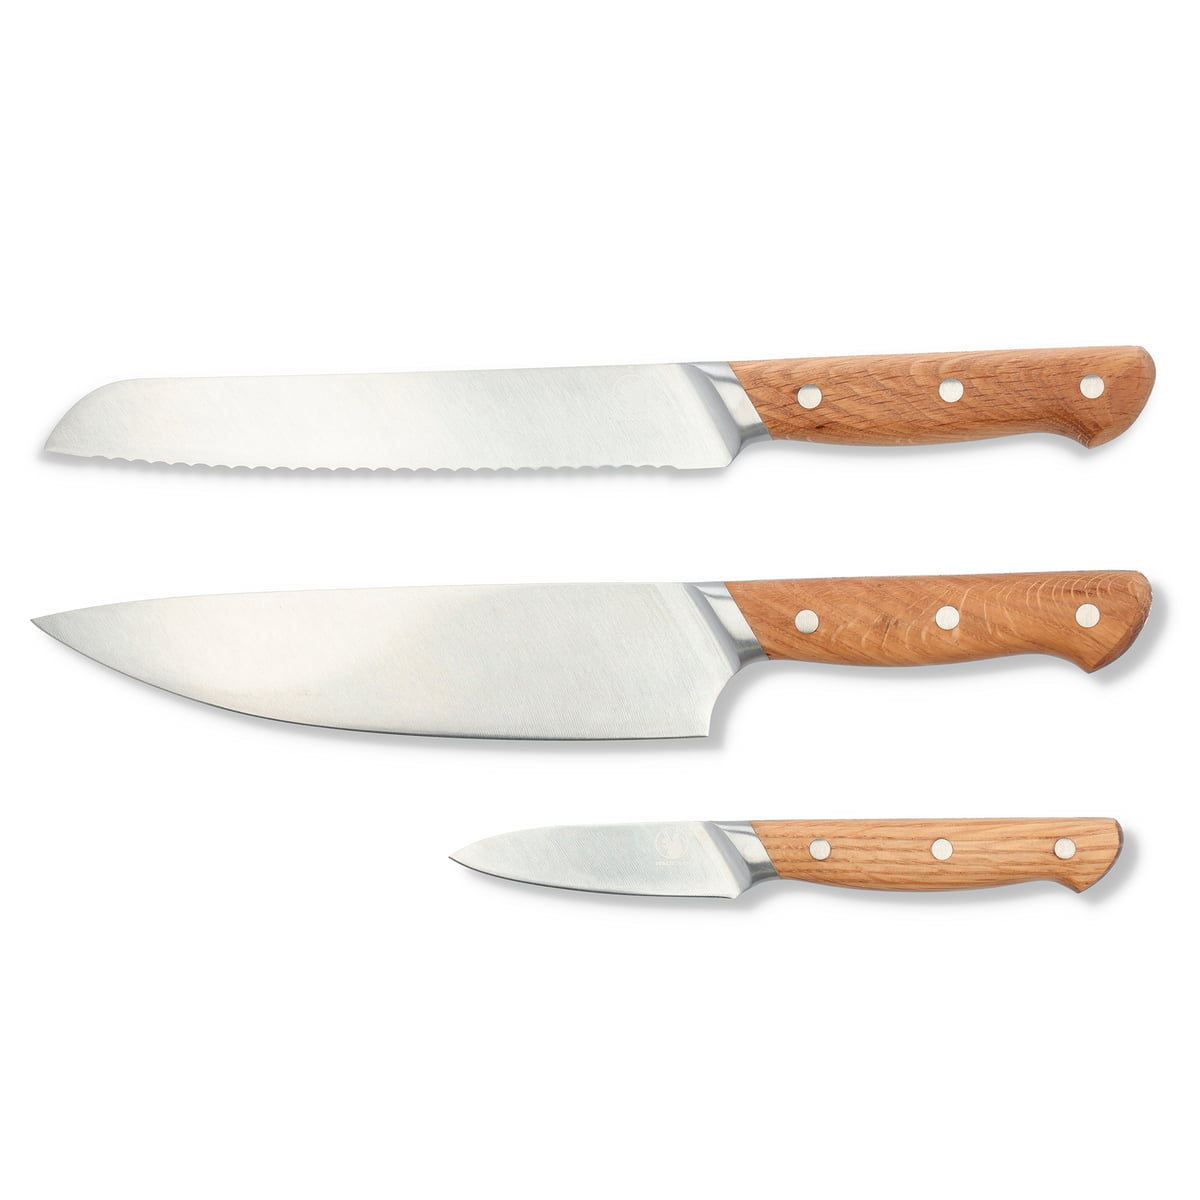 Monzo Wood Knife Set - Set of 4